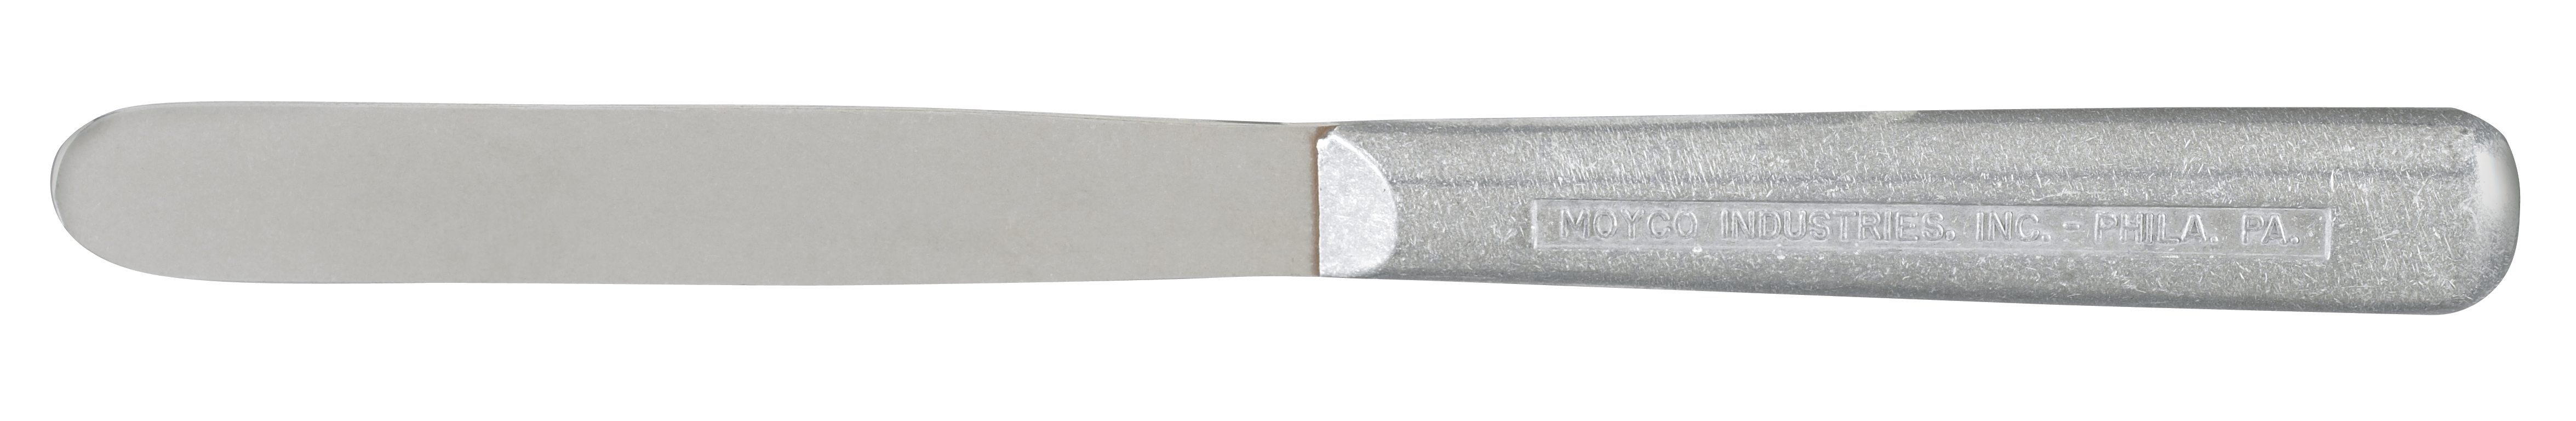 spatula-steel-2-straight-4-1-2-578-38610-miltex.jpg